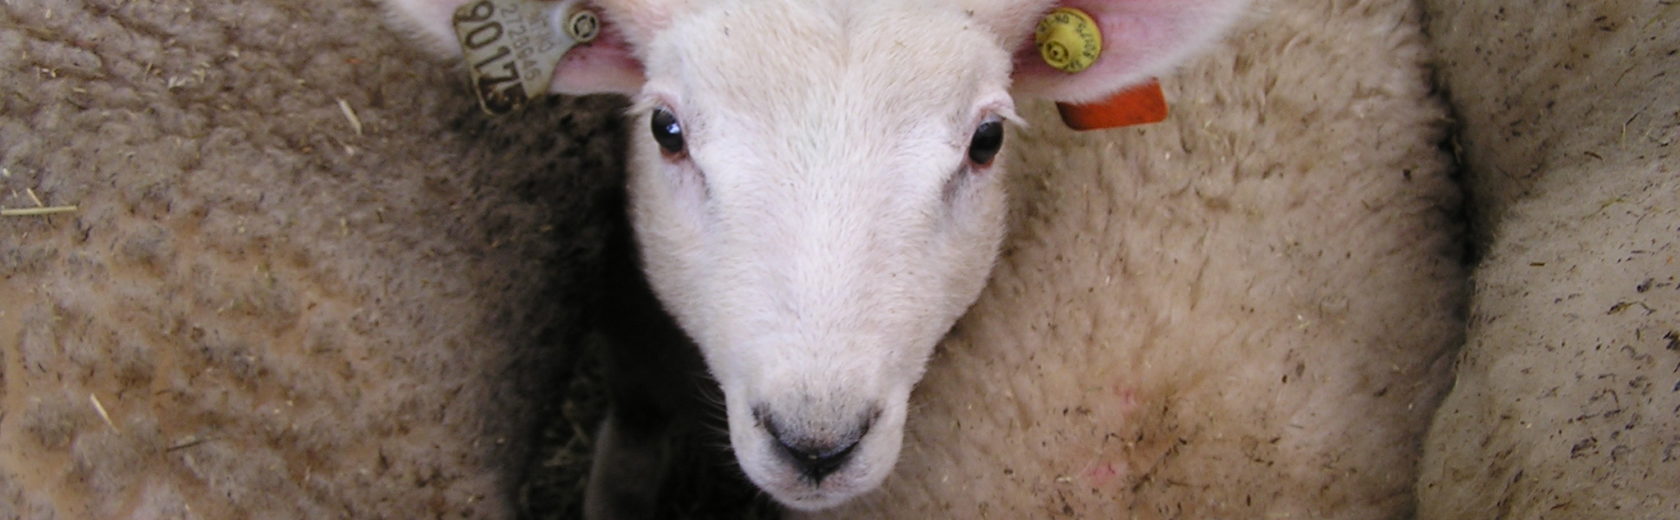 mouton agneau